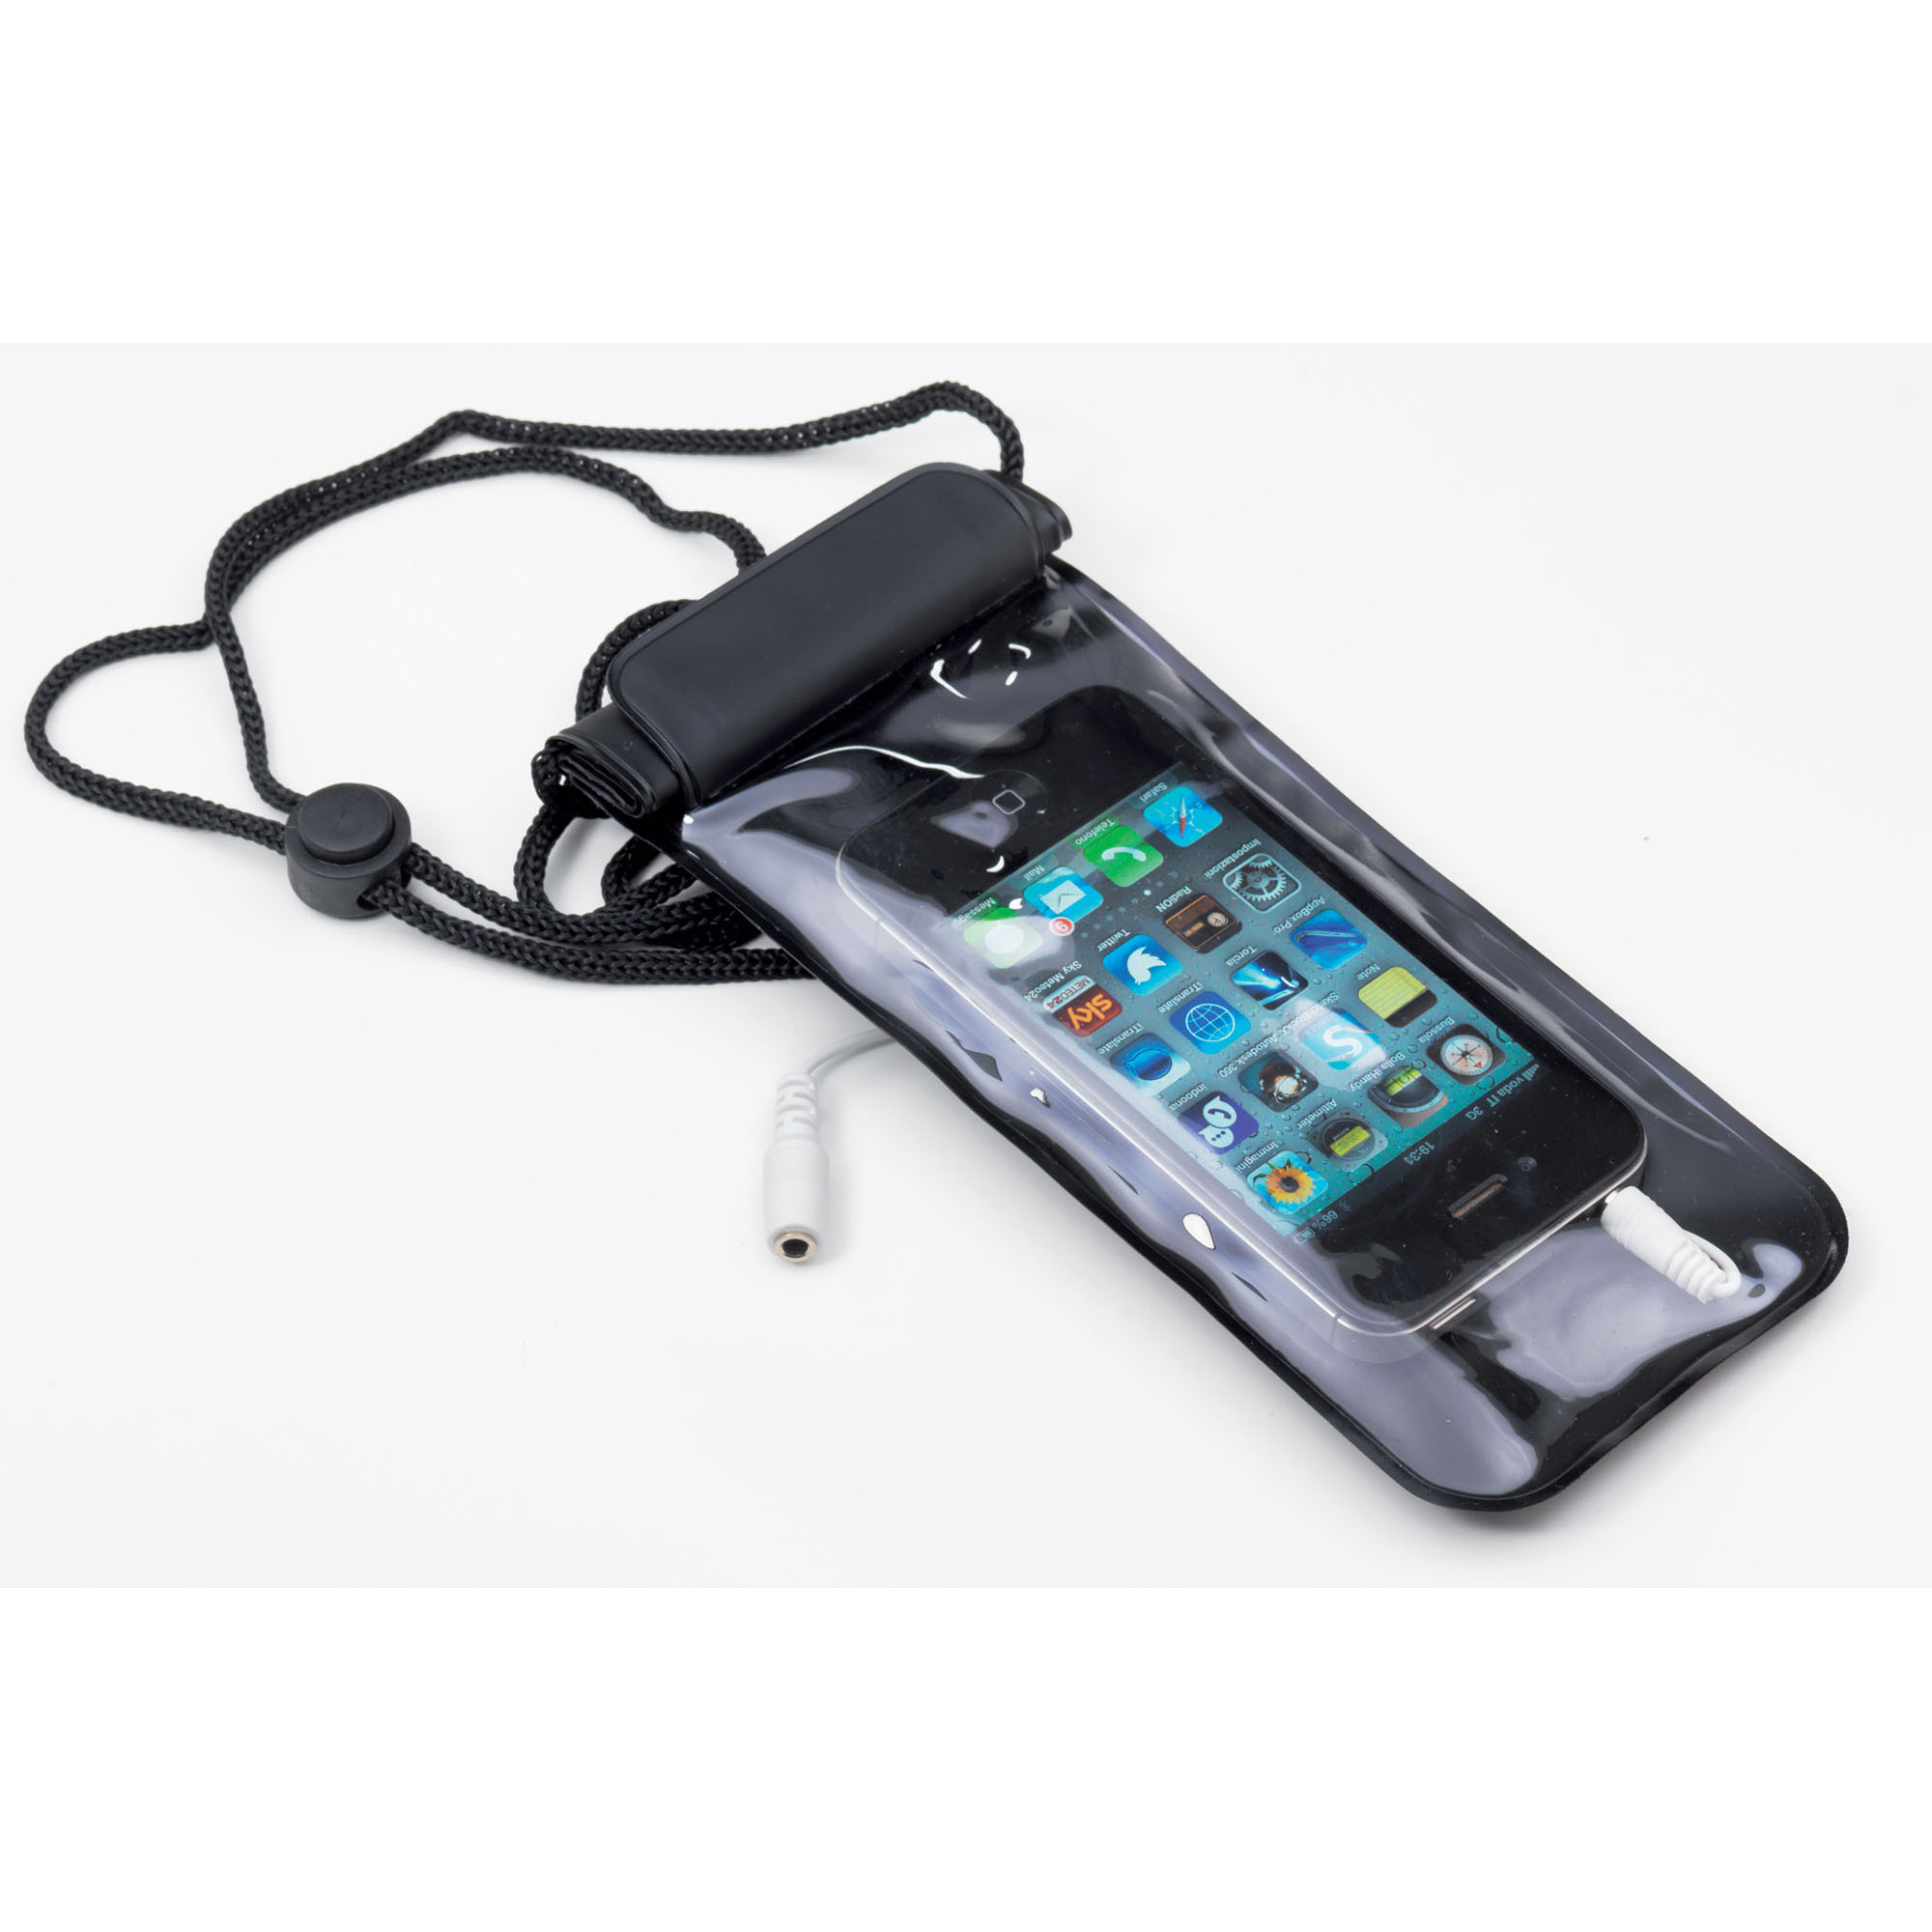 Contenitore waterproof per Iphone nero